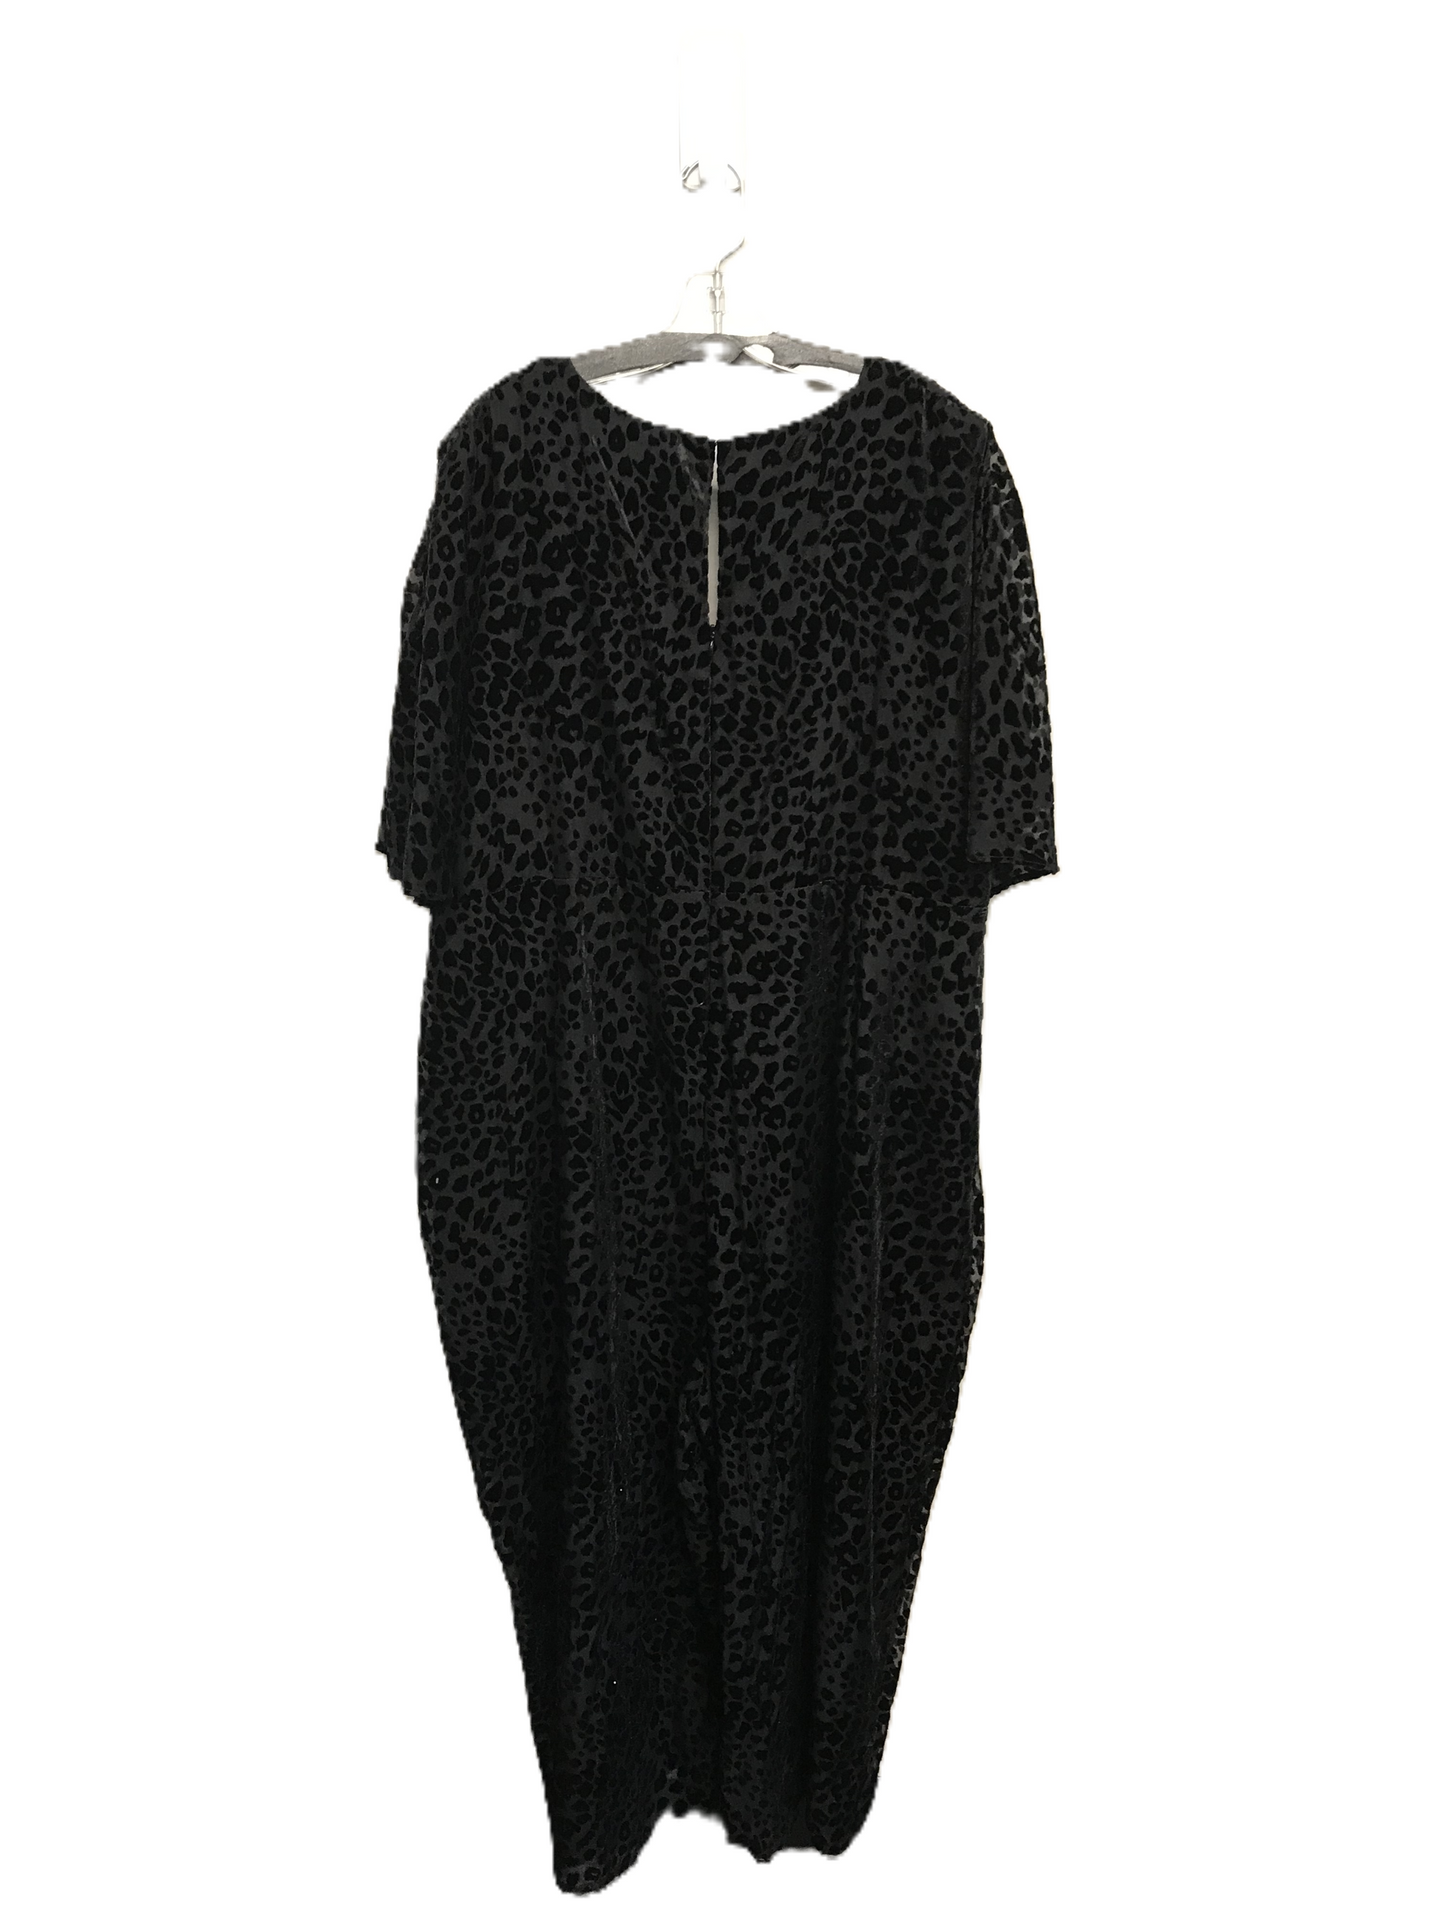 Black Jumpsuit By Greylin, Size: 2x